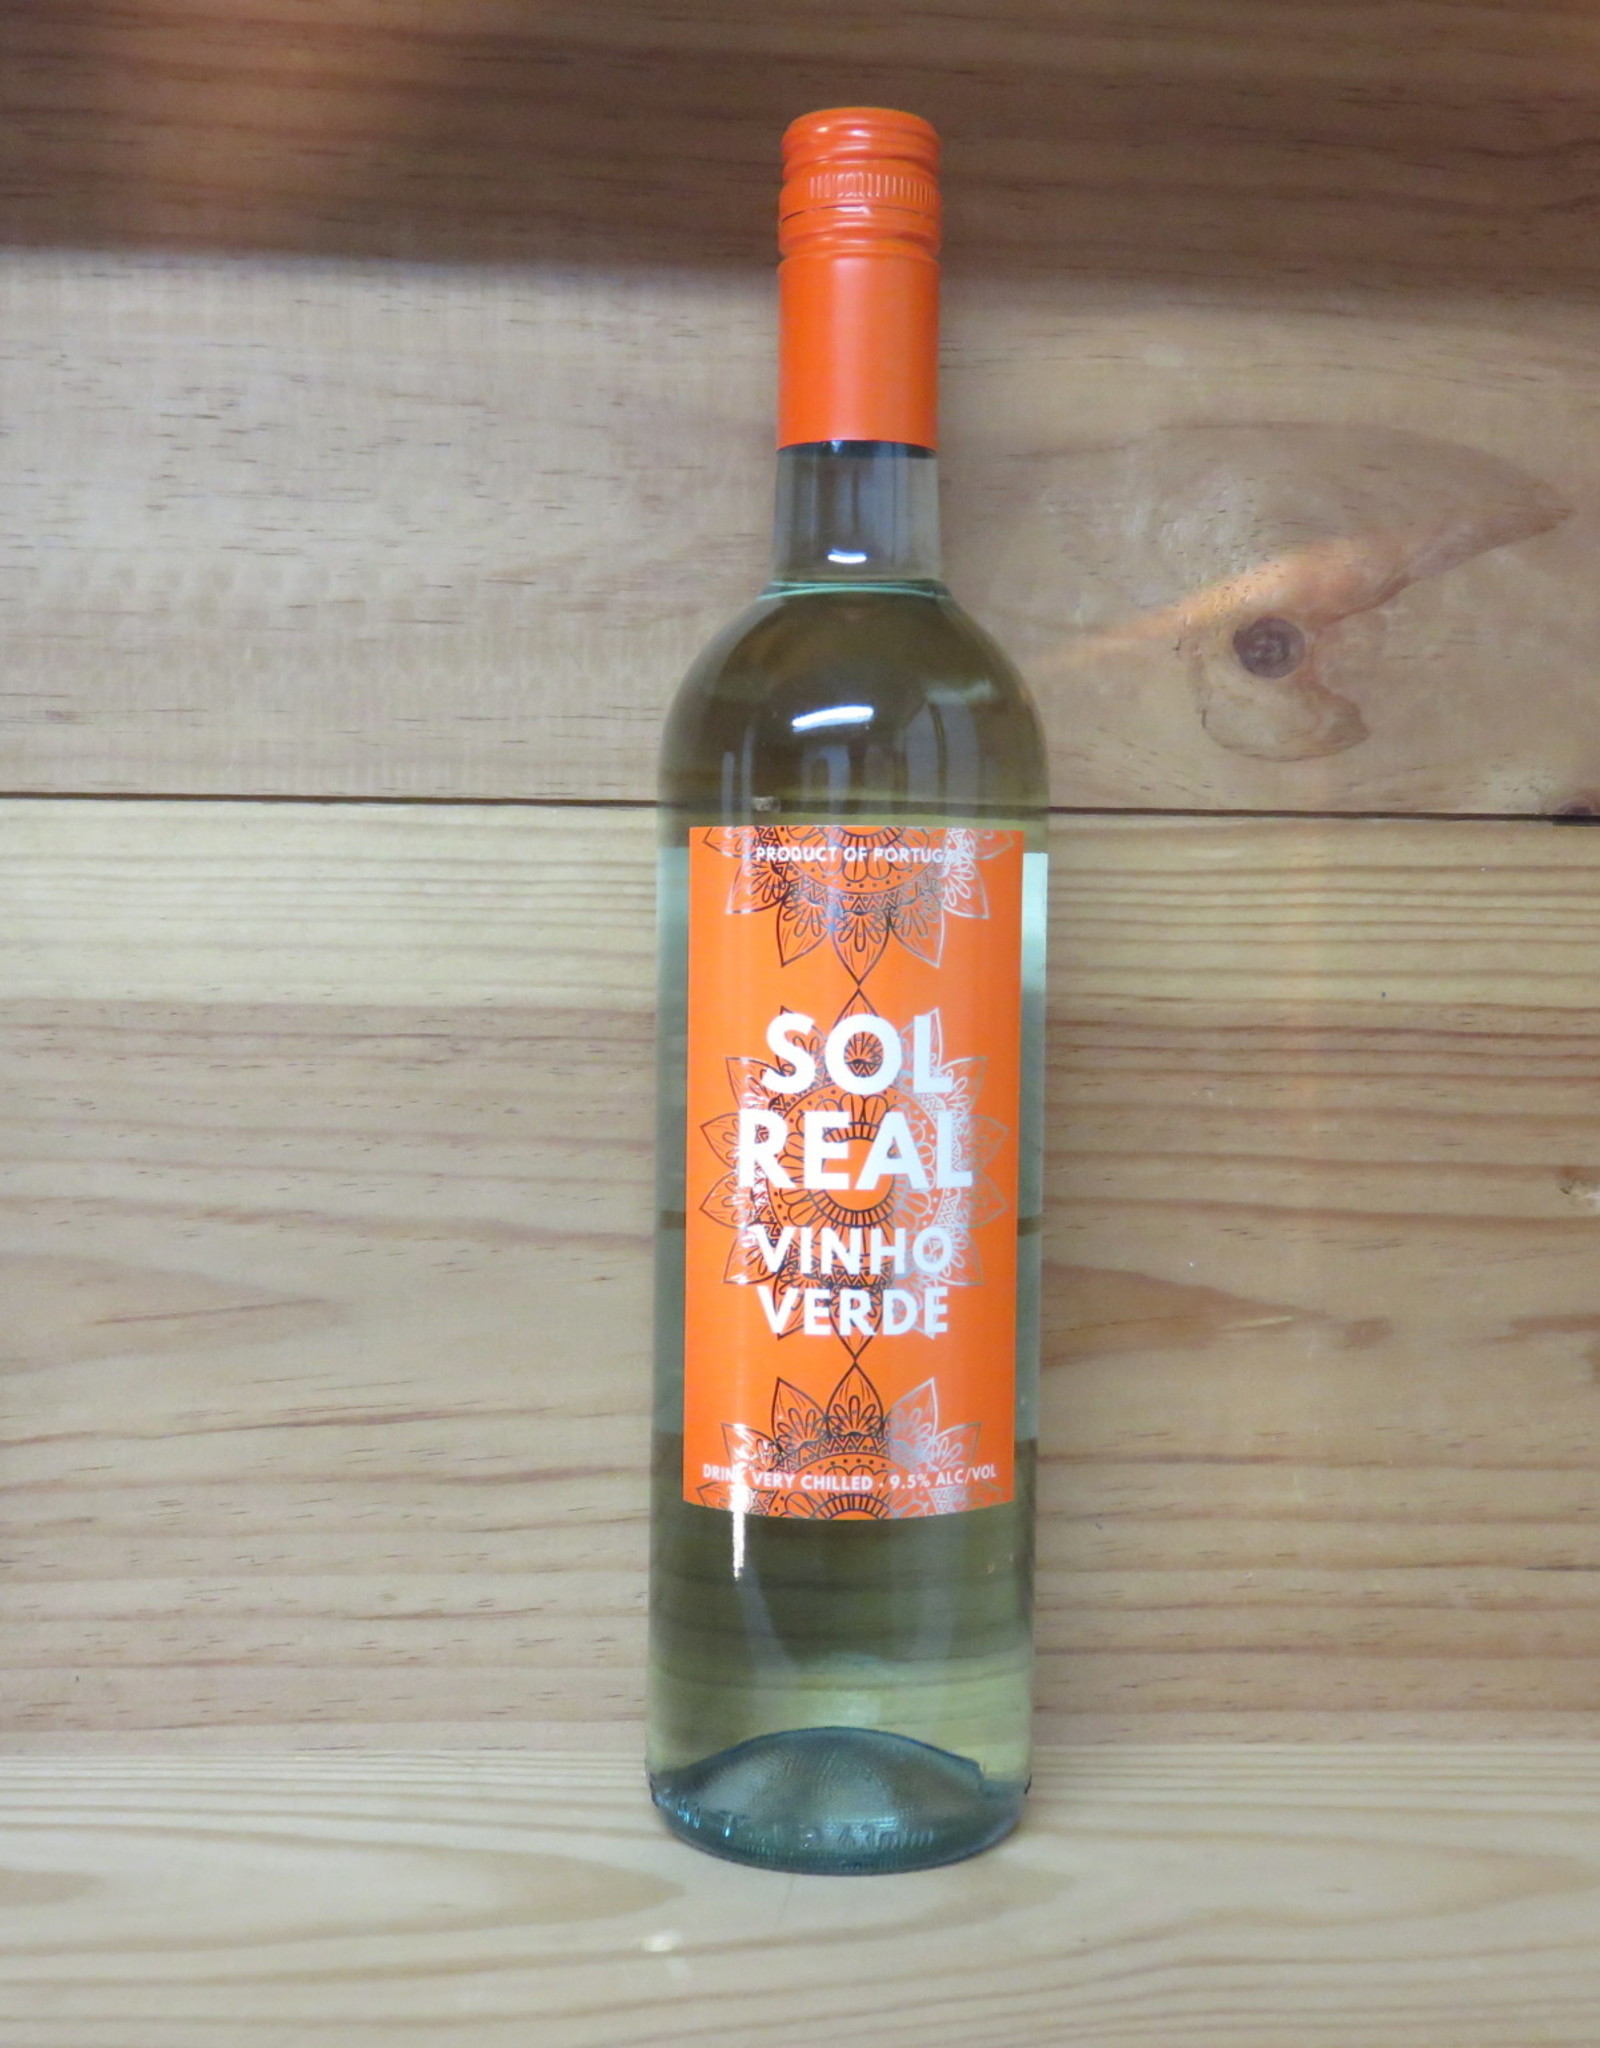 Quinta da Lixa "Sol Real" Vinho Verde White 2020